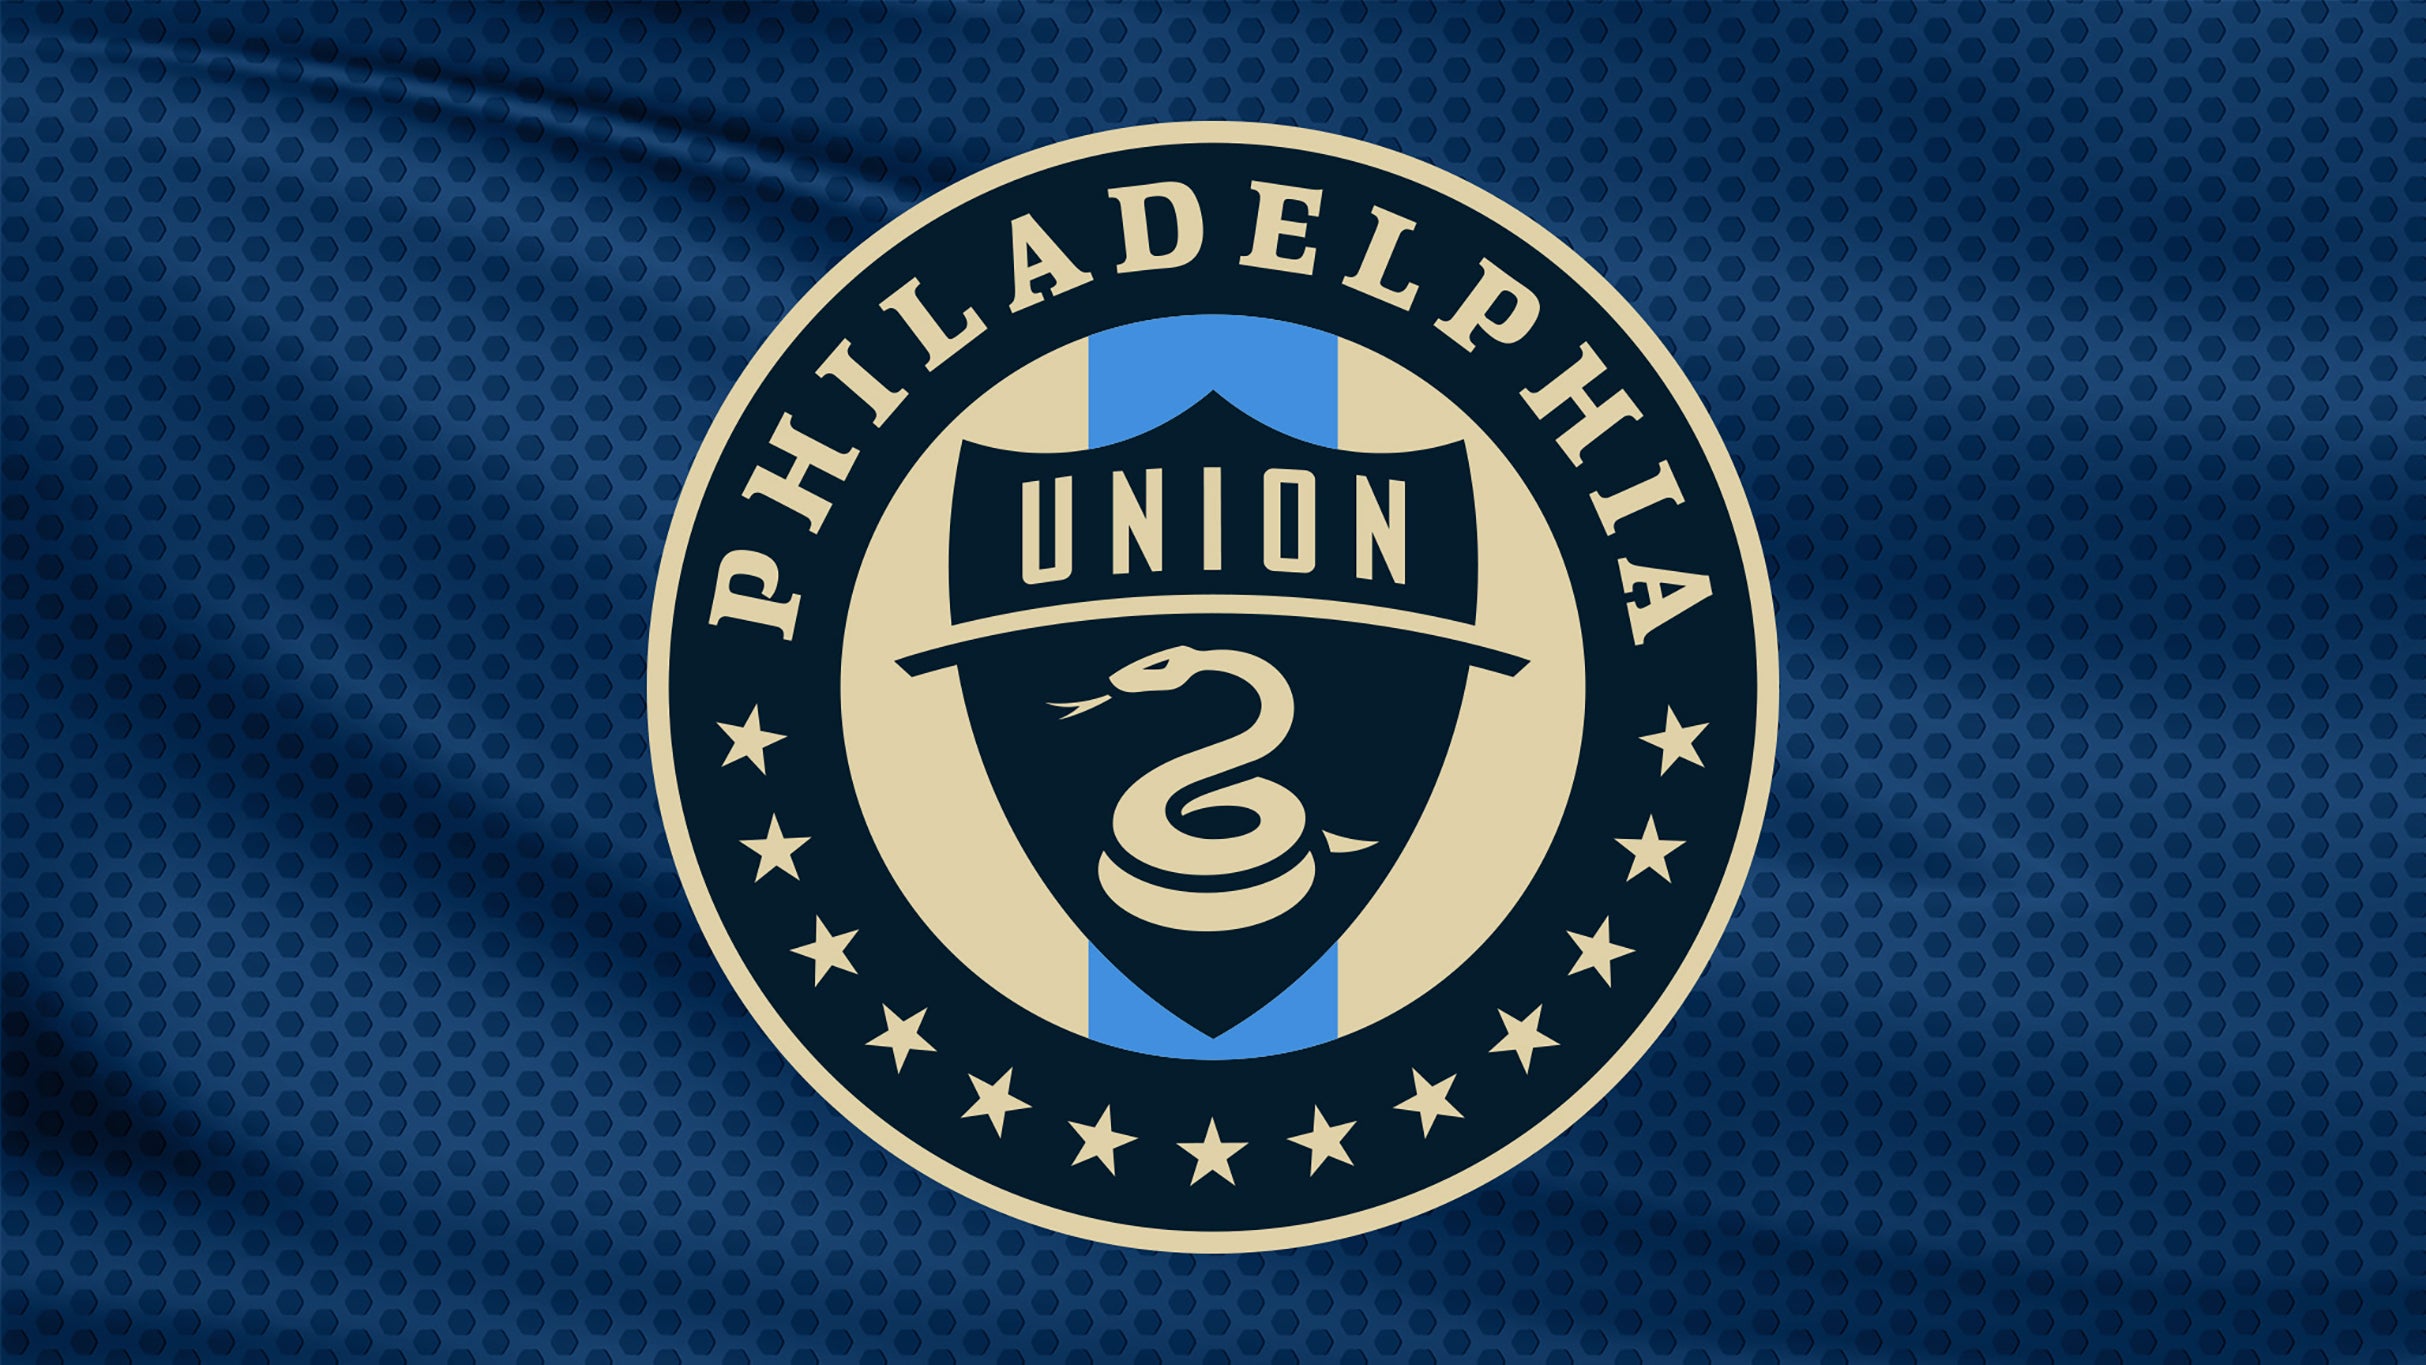 Philadelphia Union vs. Real Salt Lake at Subaru Park